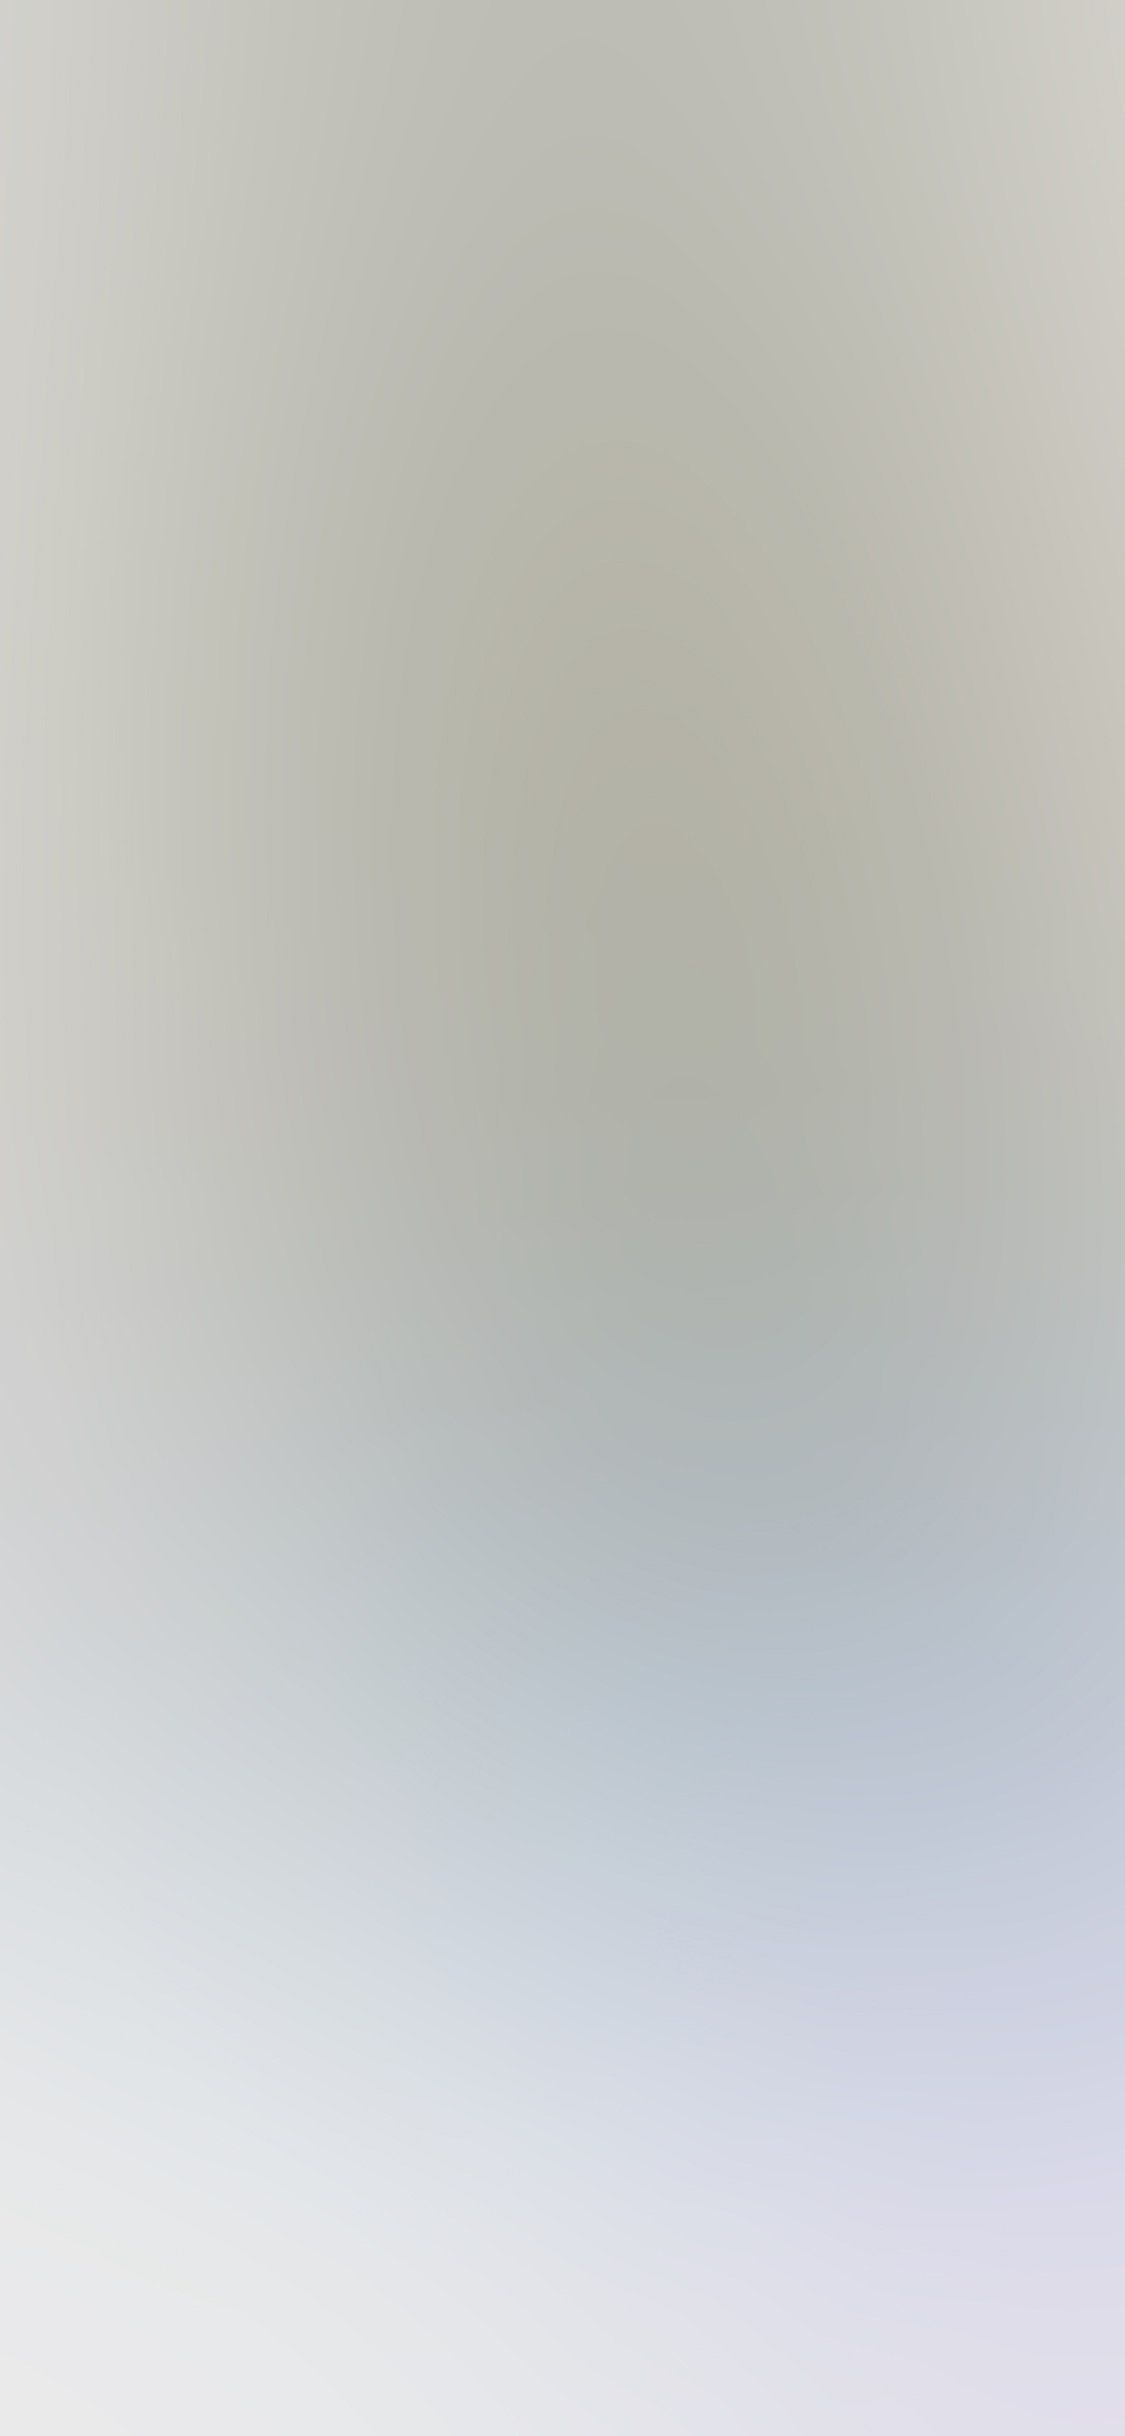 Sh56 White Oksusu Art Gradation Blur 41 iPhone Wallpaper